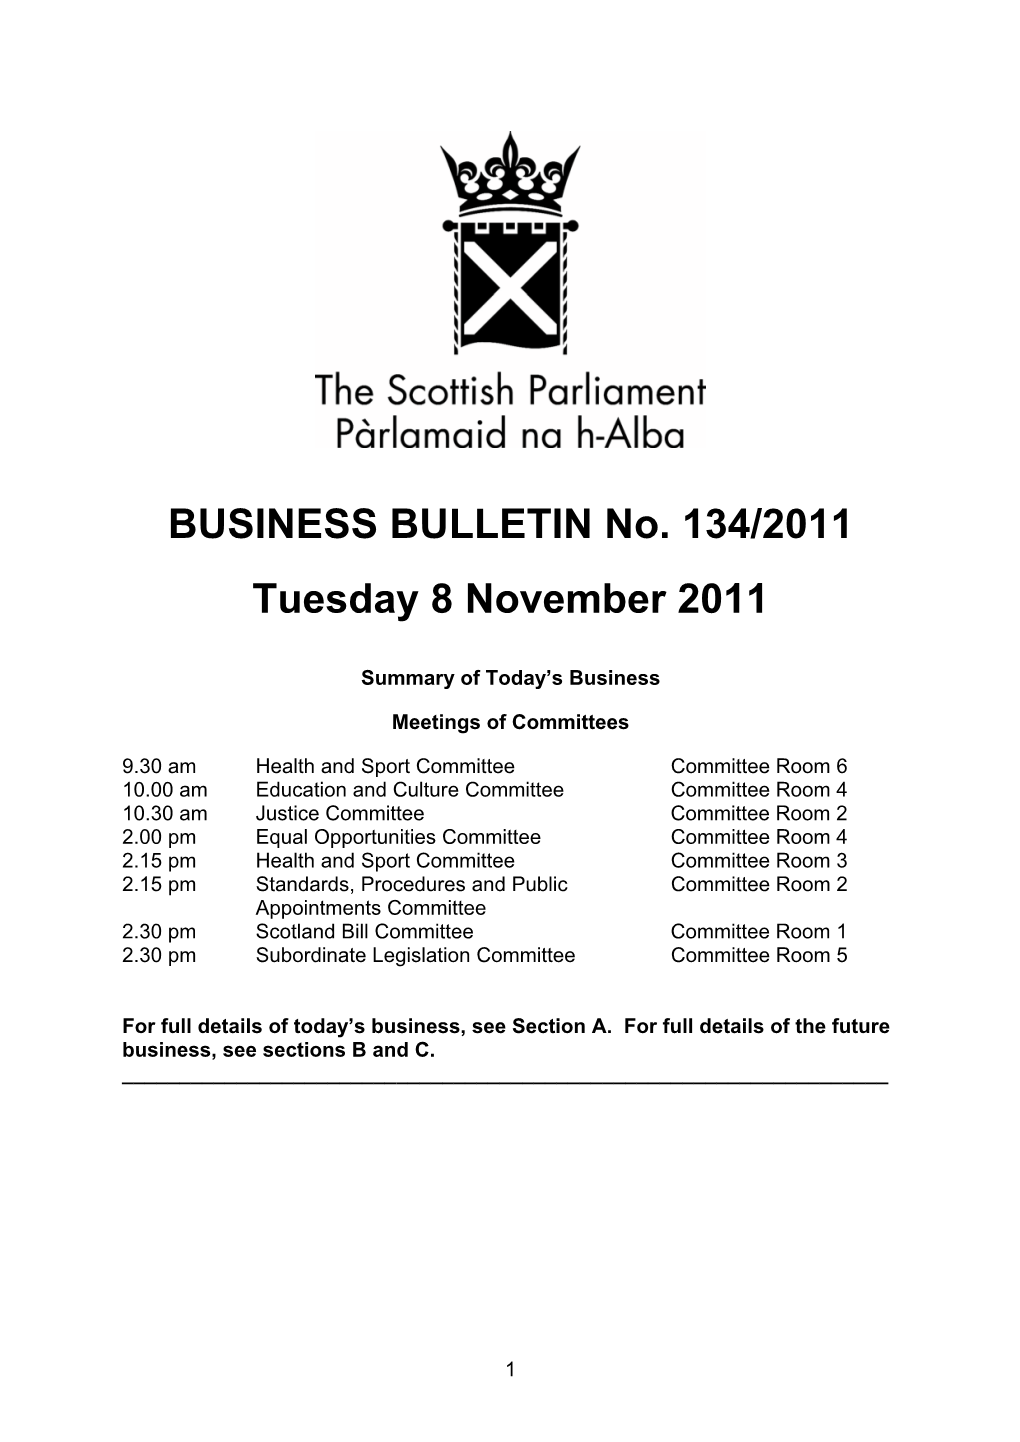 BUSINESS BULLETIN No. 134/2011 Tuesday 8 November 2011